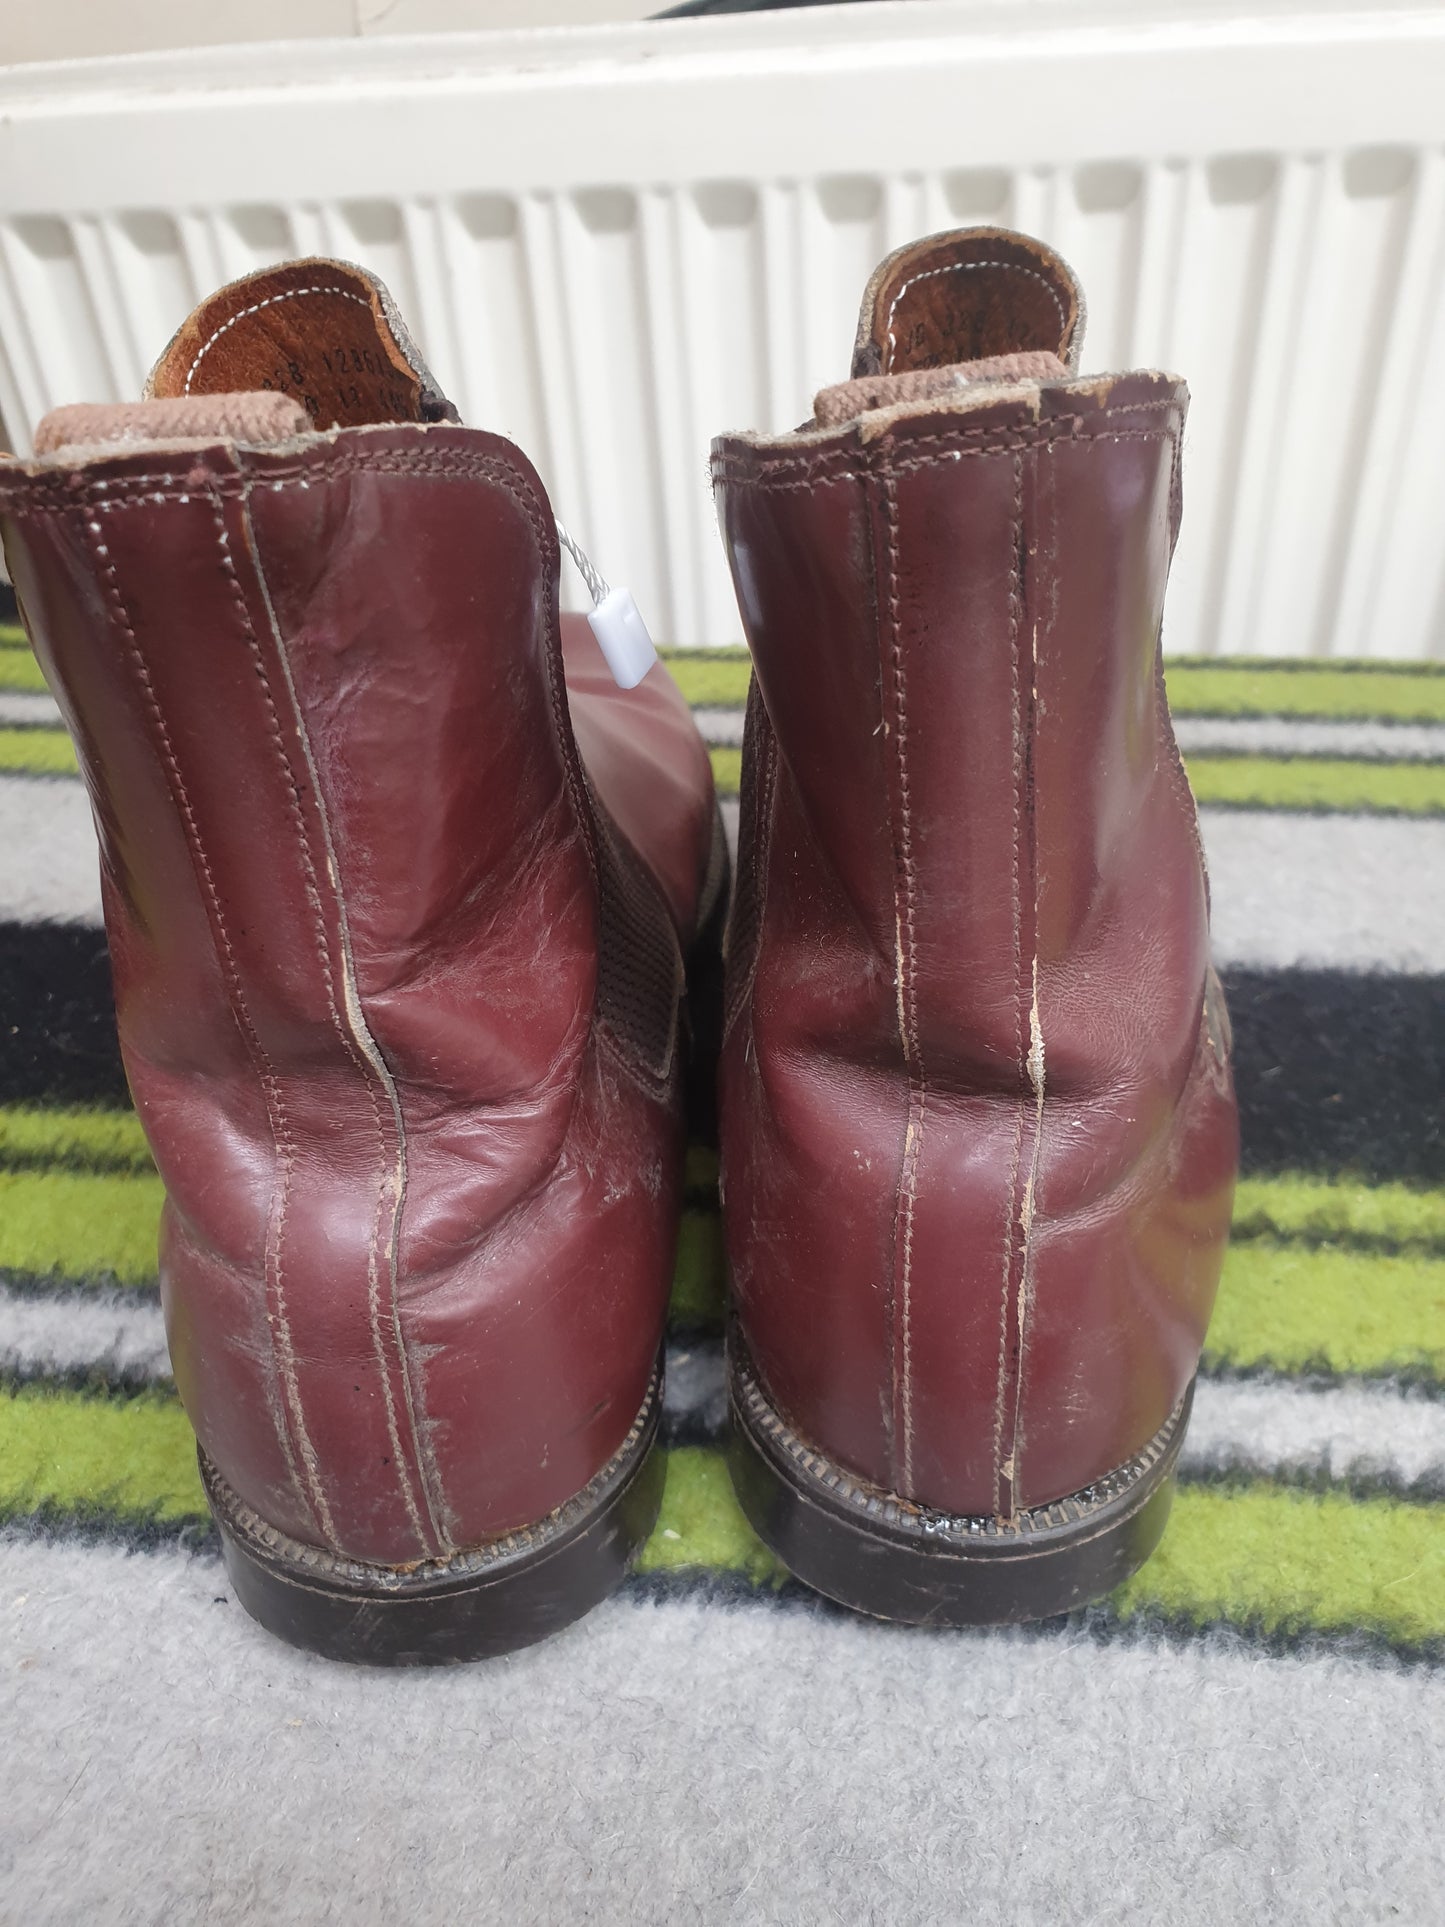 Mens Size 10 Stylo oxblood jodhpur boots FREE POSTAGE ✅